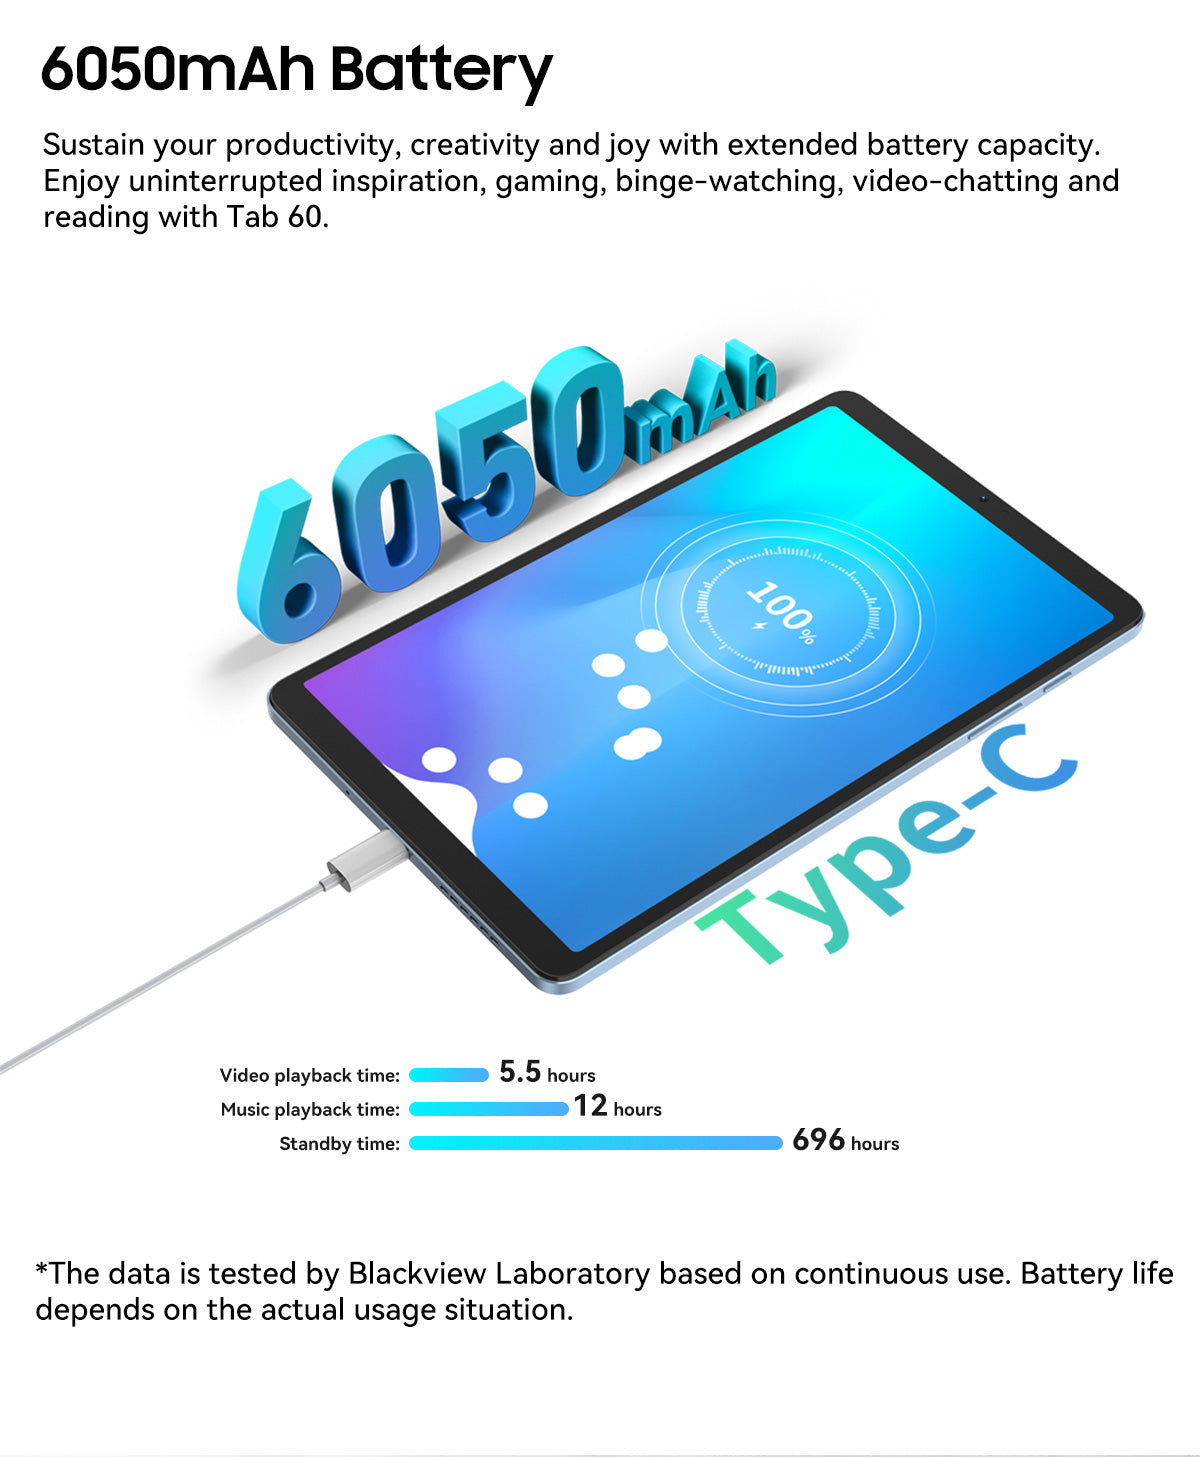 Blackview 60 Tablet PC